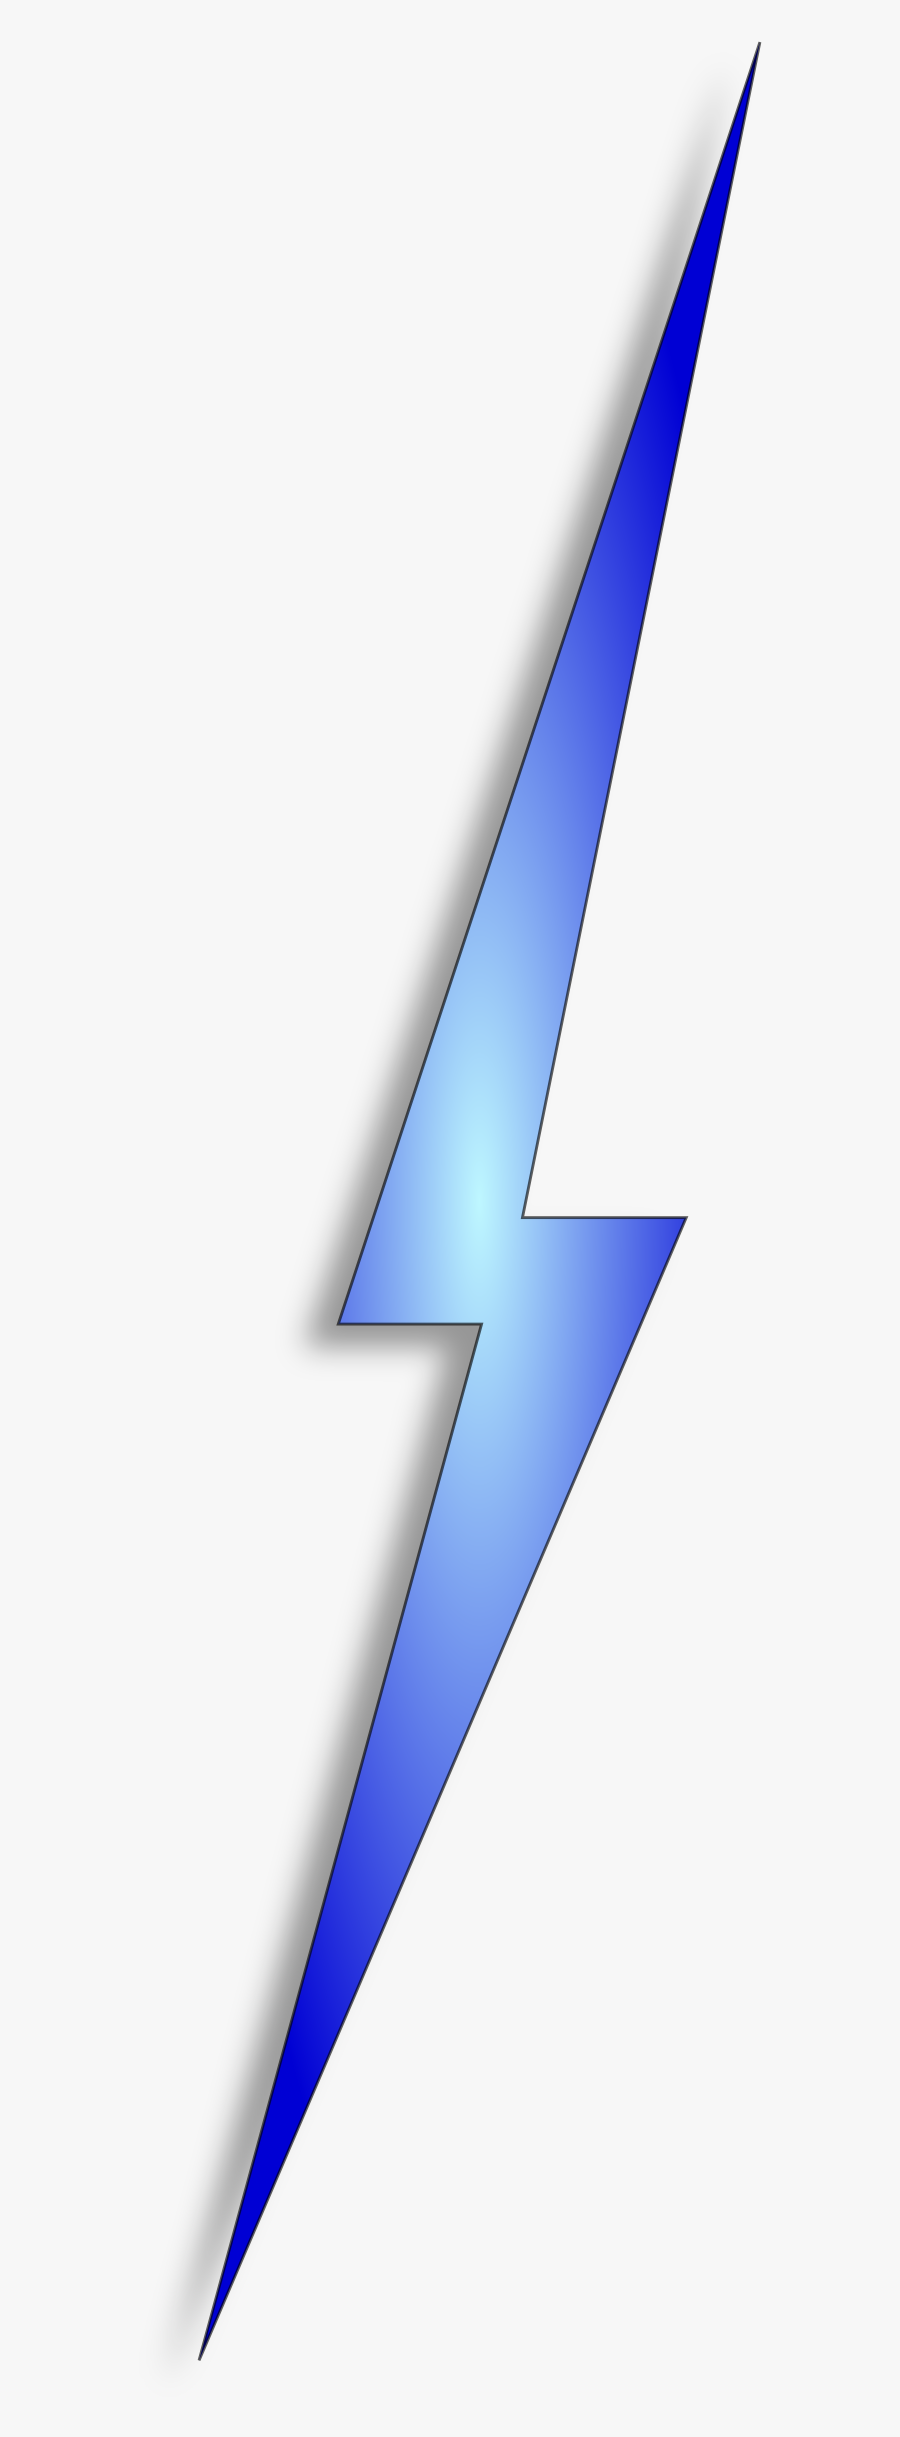 Electric Clipart Lightning Flash - Blue Lightning Bolt Clipart, Transparent Clipart